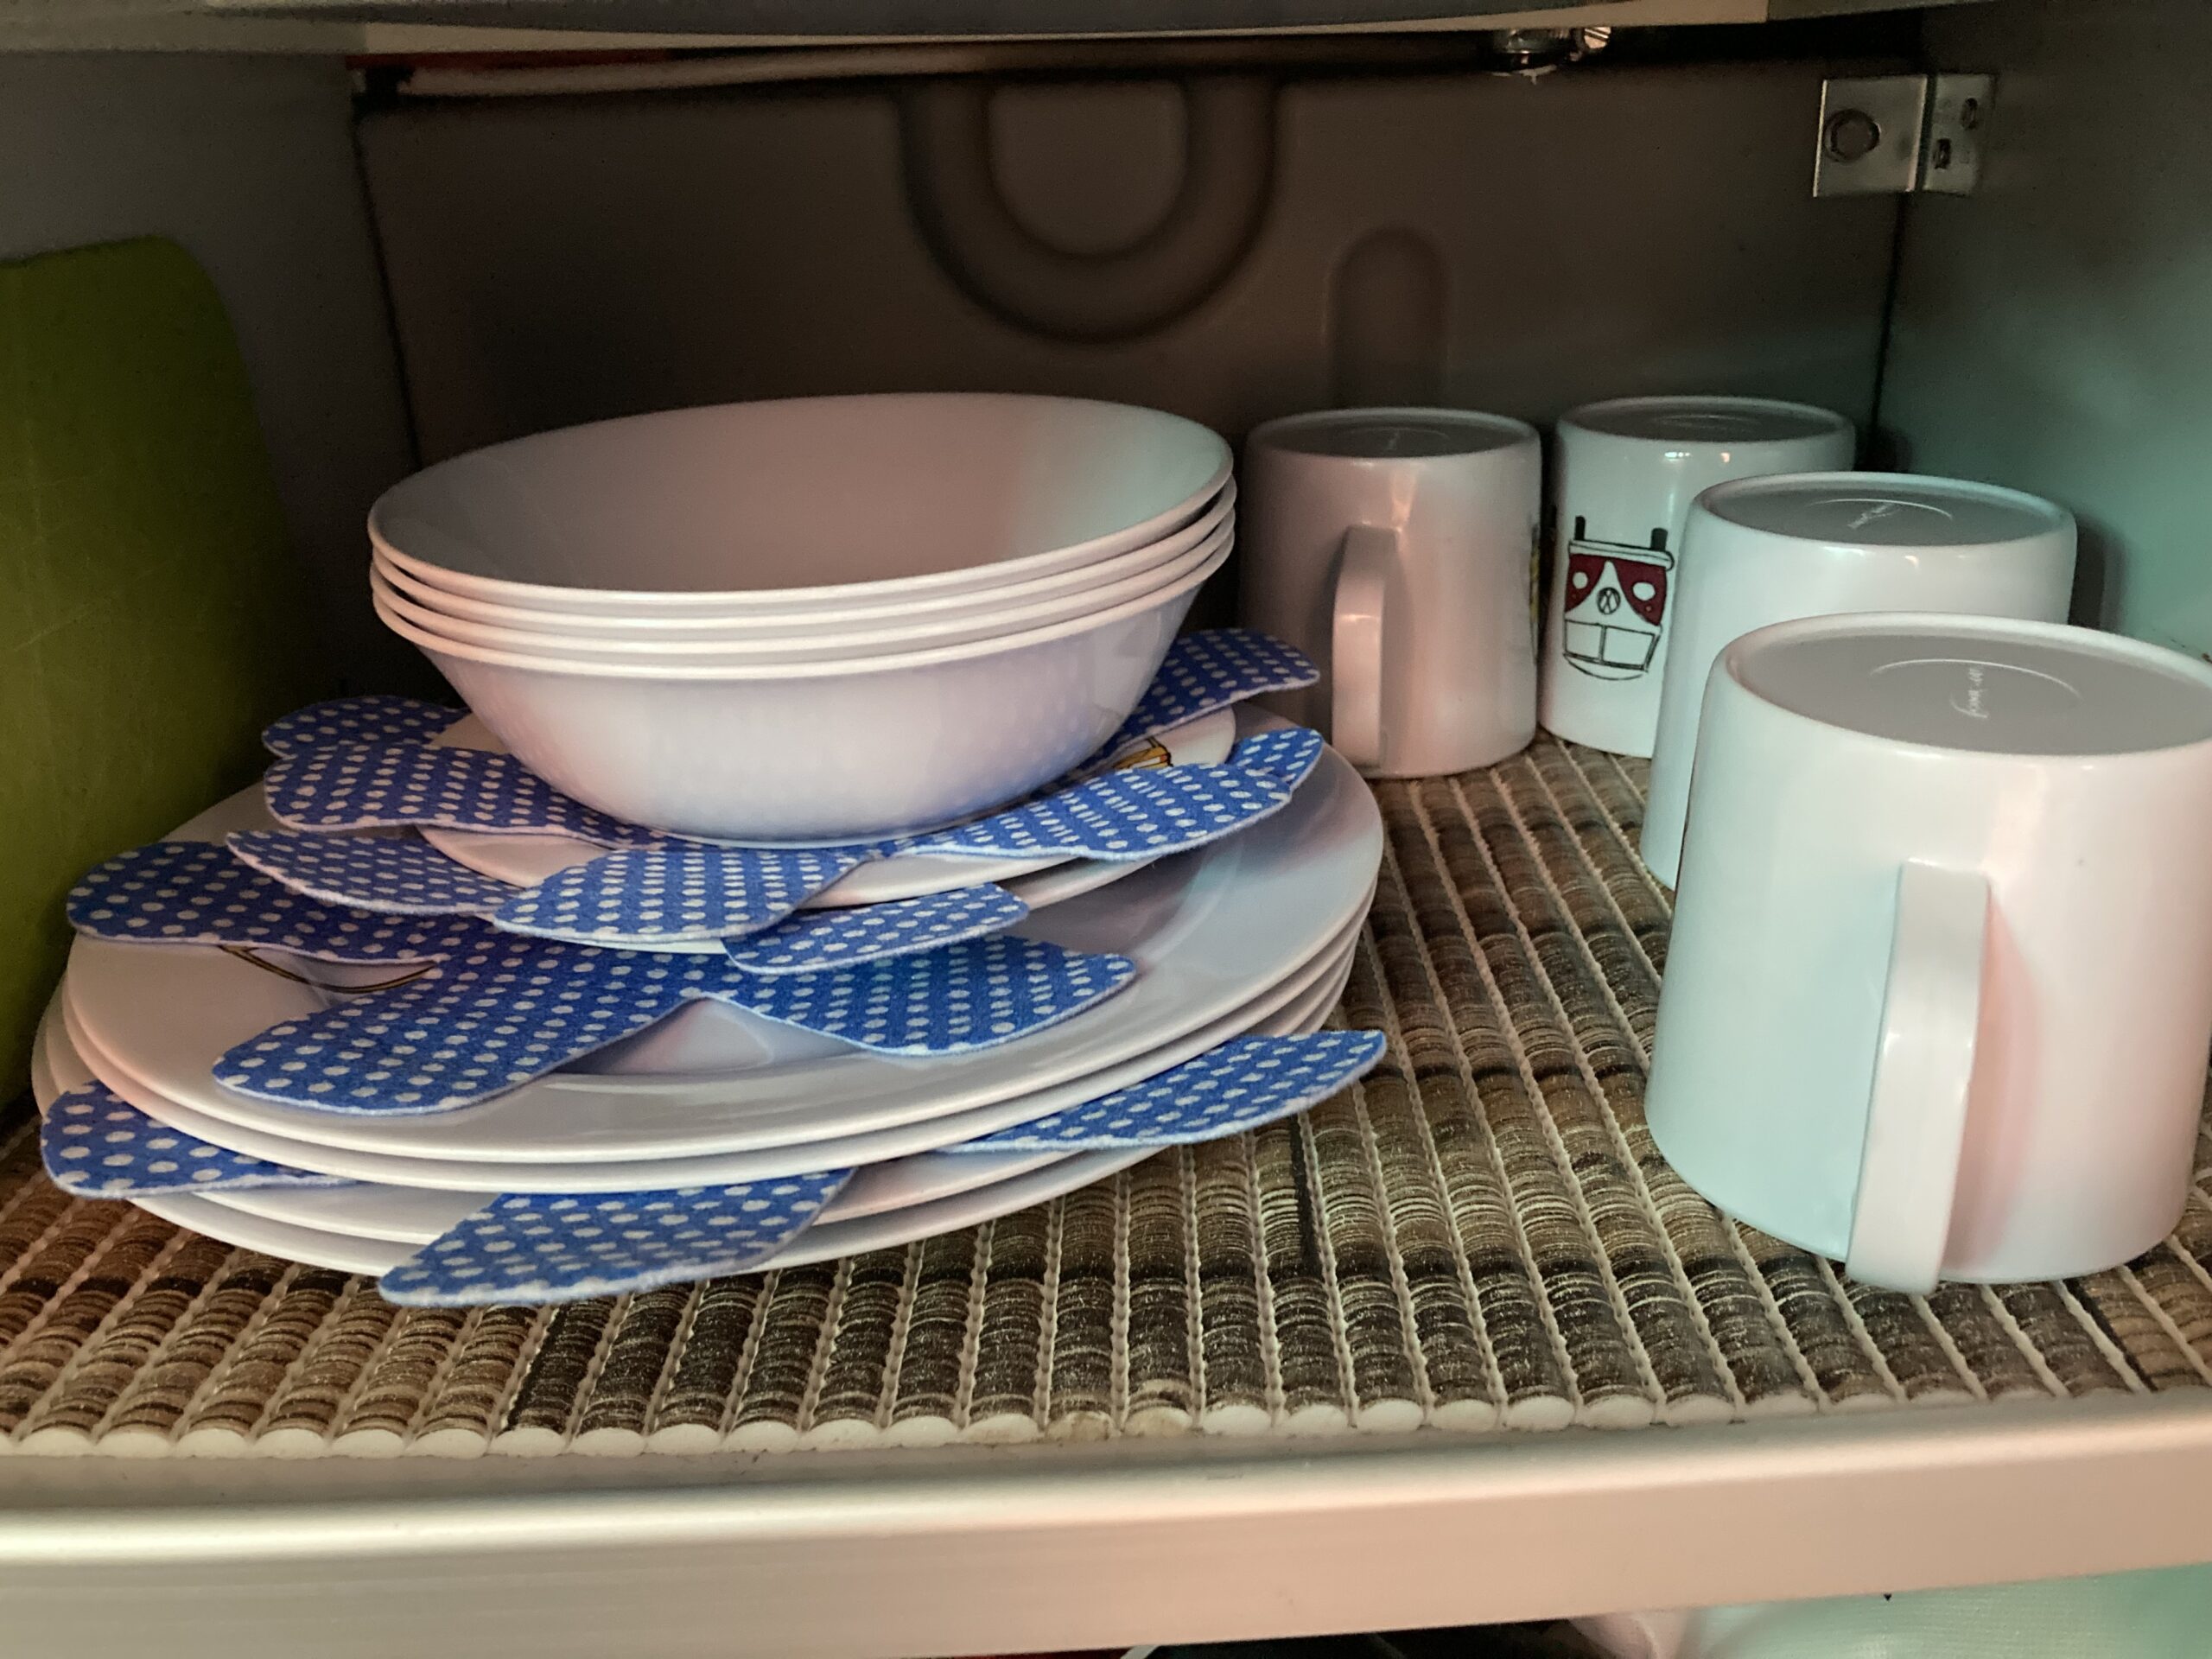 Plates in a motorhome cupboard